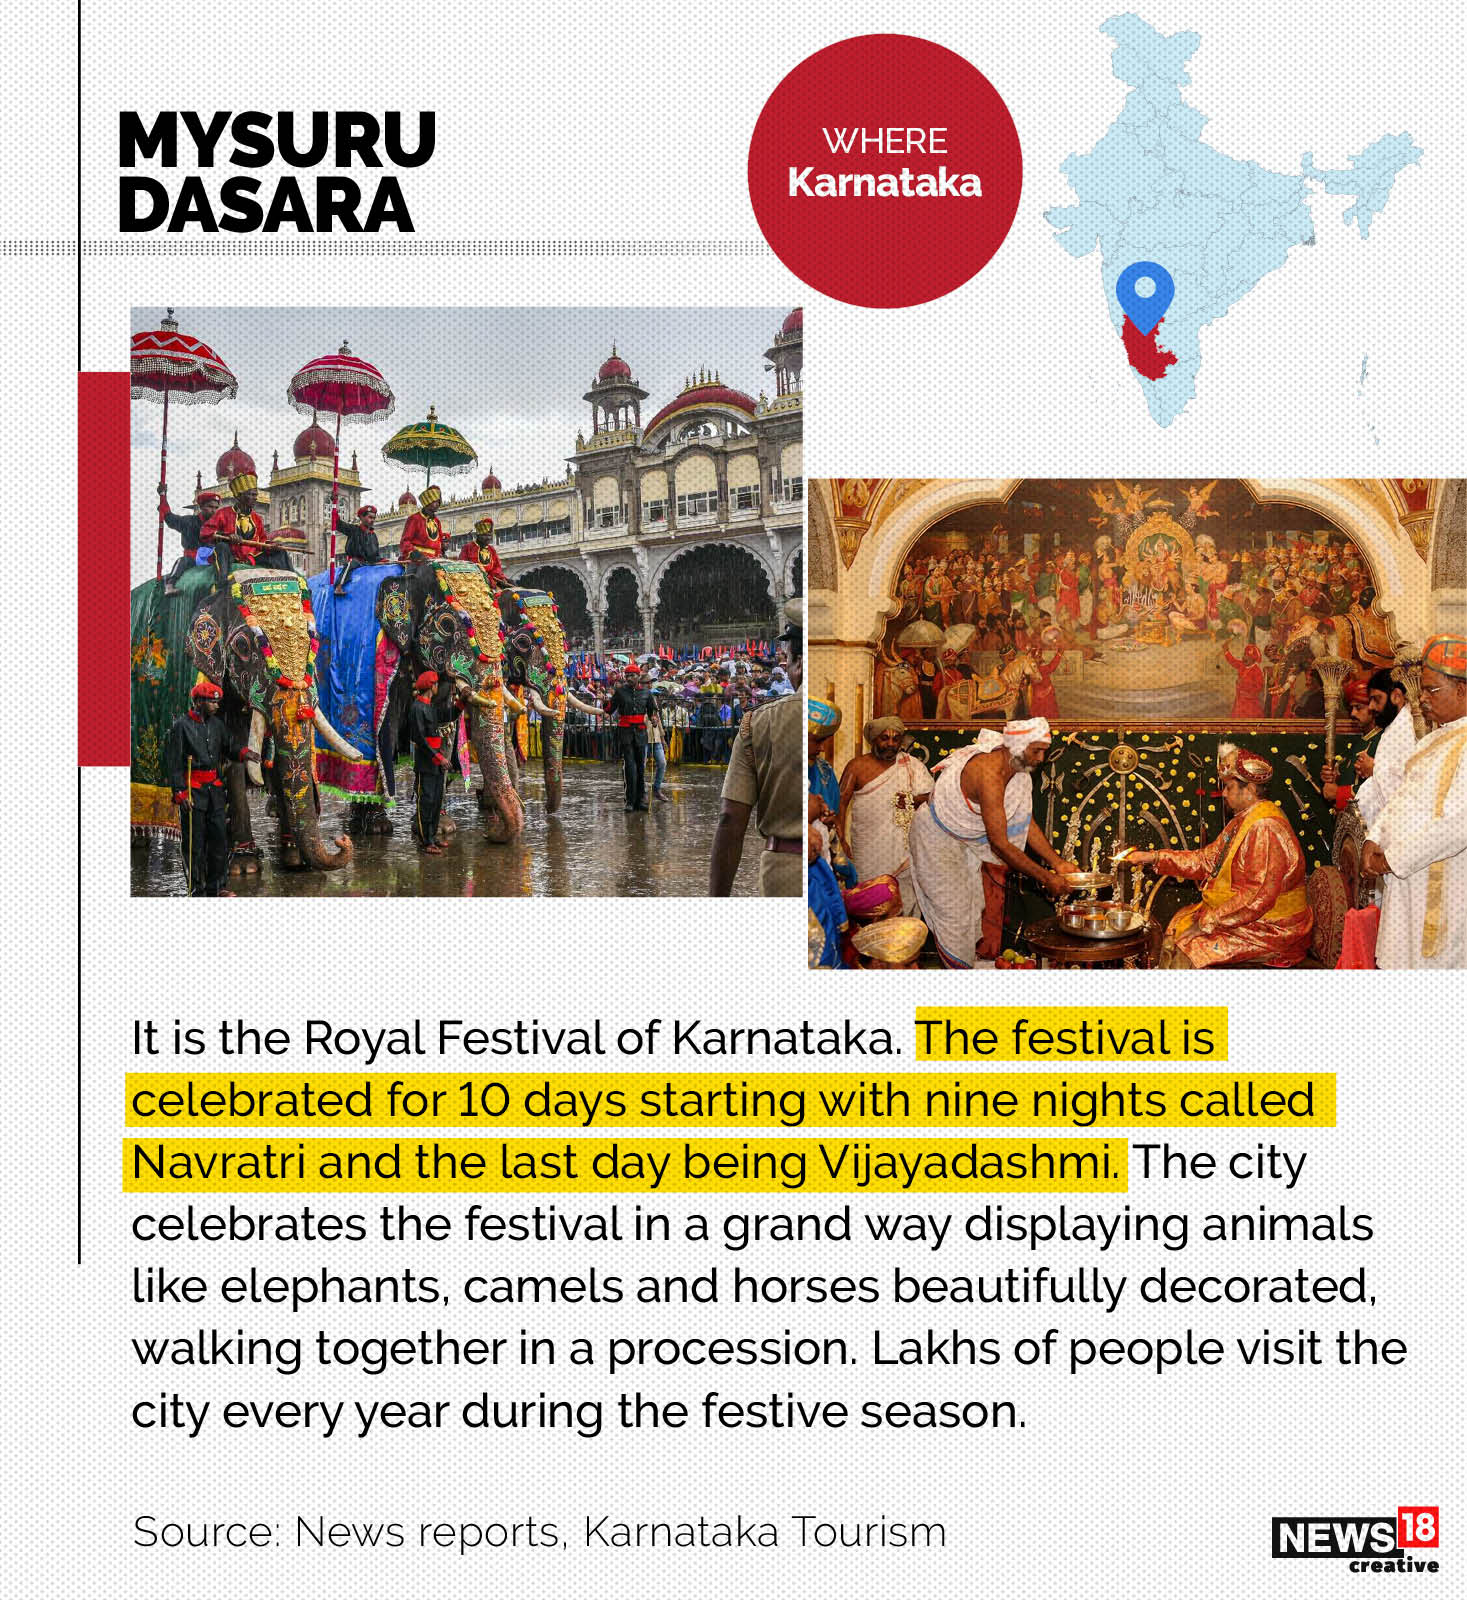 Mysuru Dasara is celebrated for 10 days starting with nine nights called Navratri and the last day being Vijayadashmi. (Image: news18 Creative)